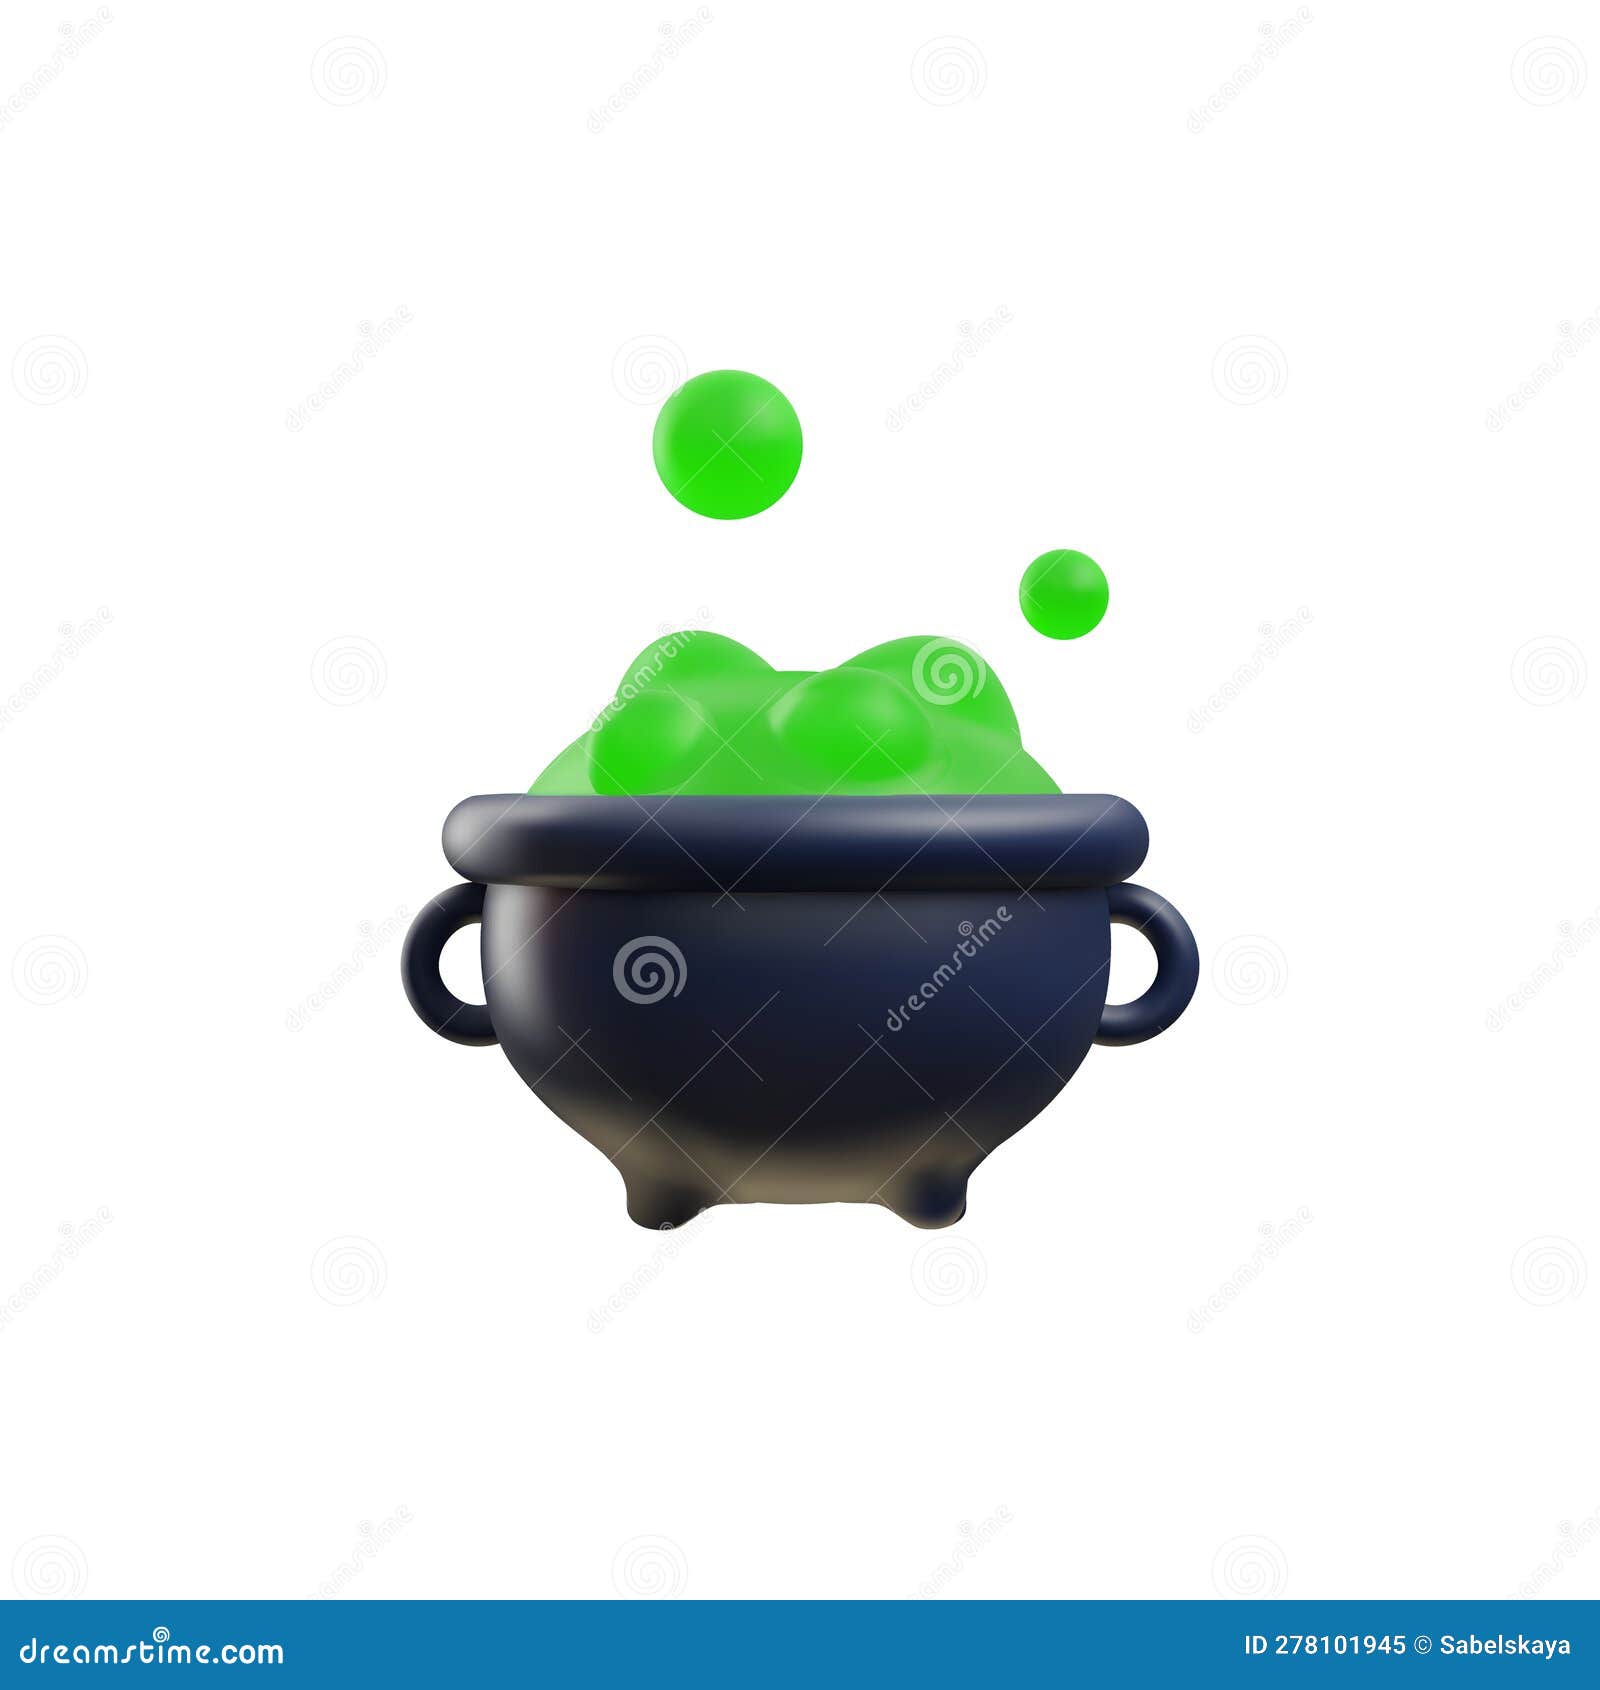 Magic pot isolated on white background. Black witch cauldron with